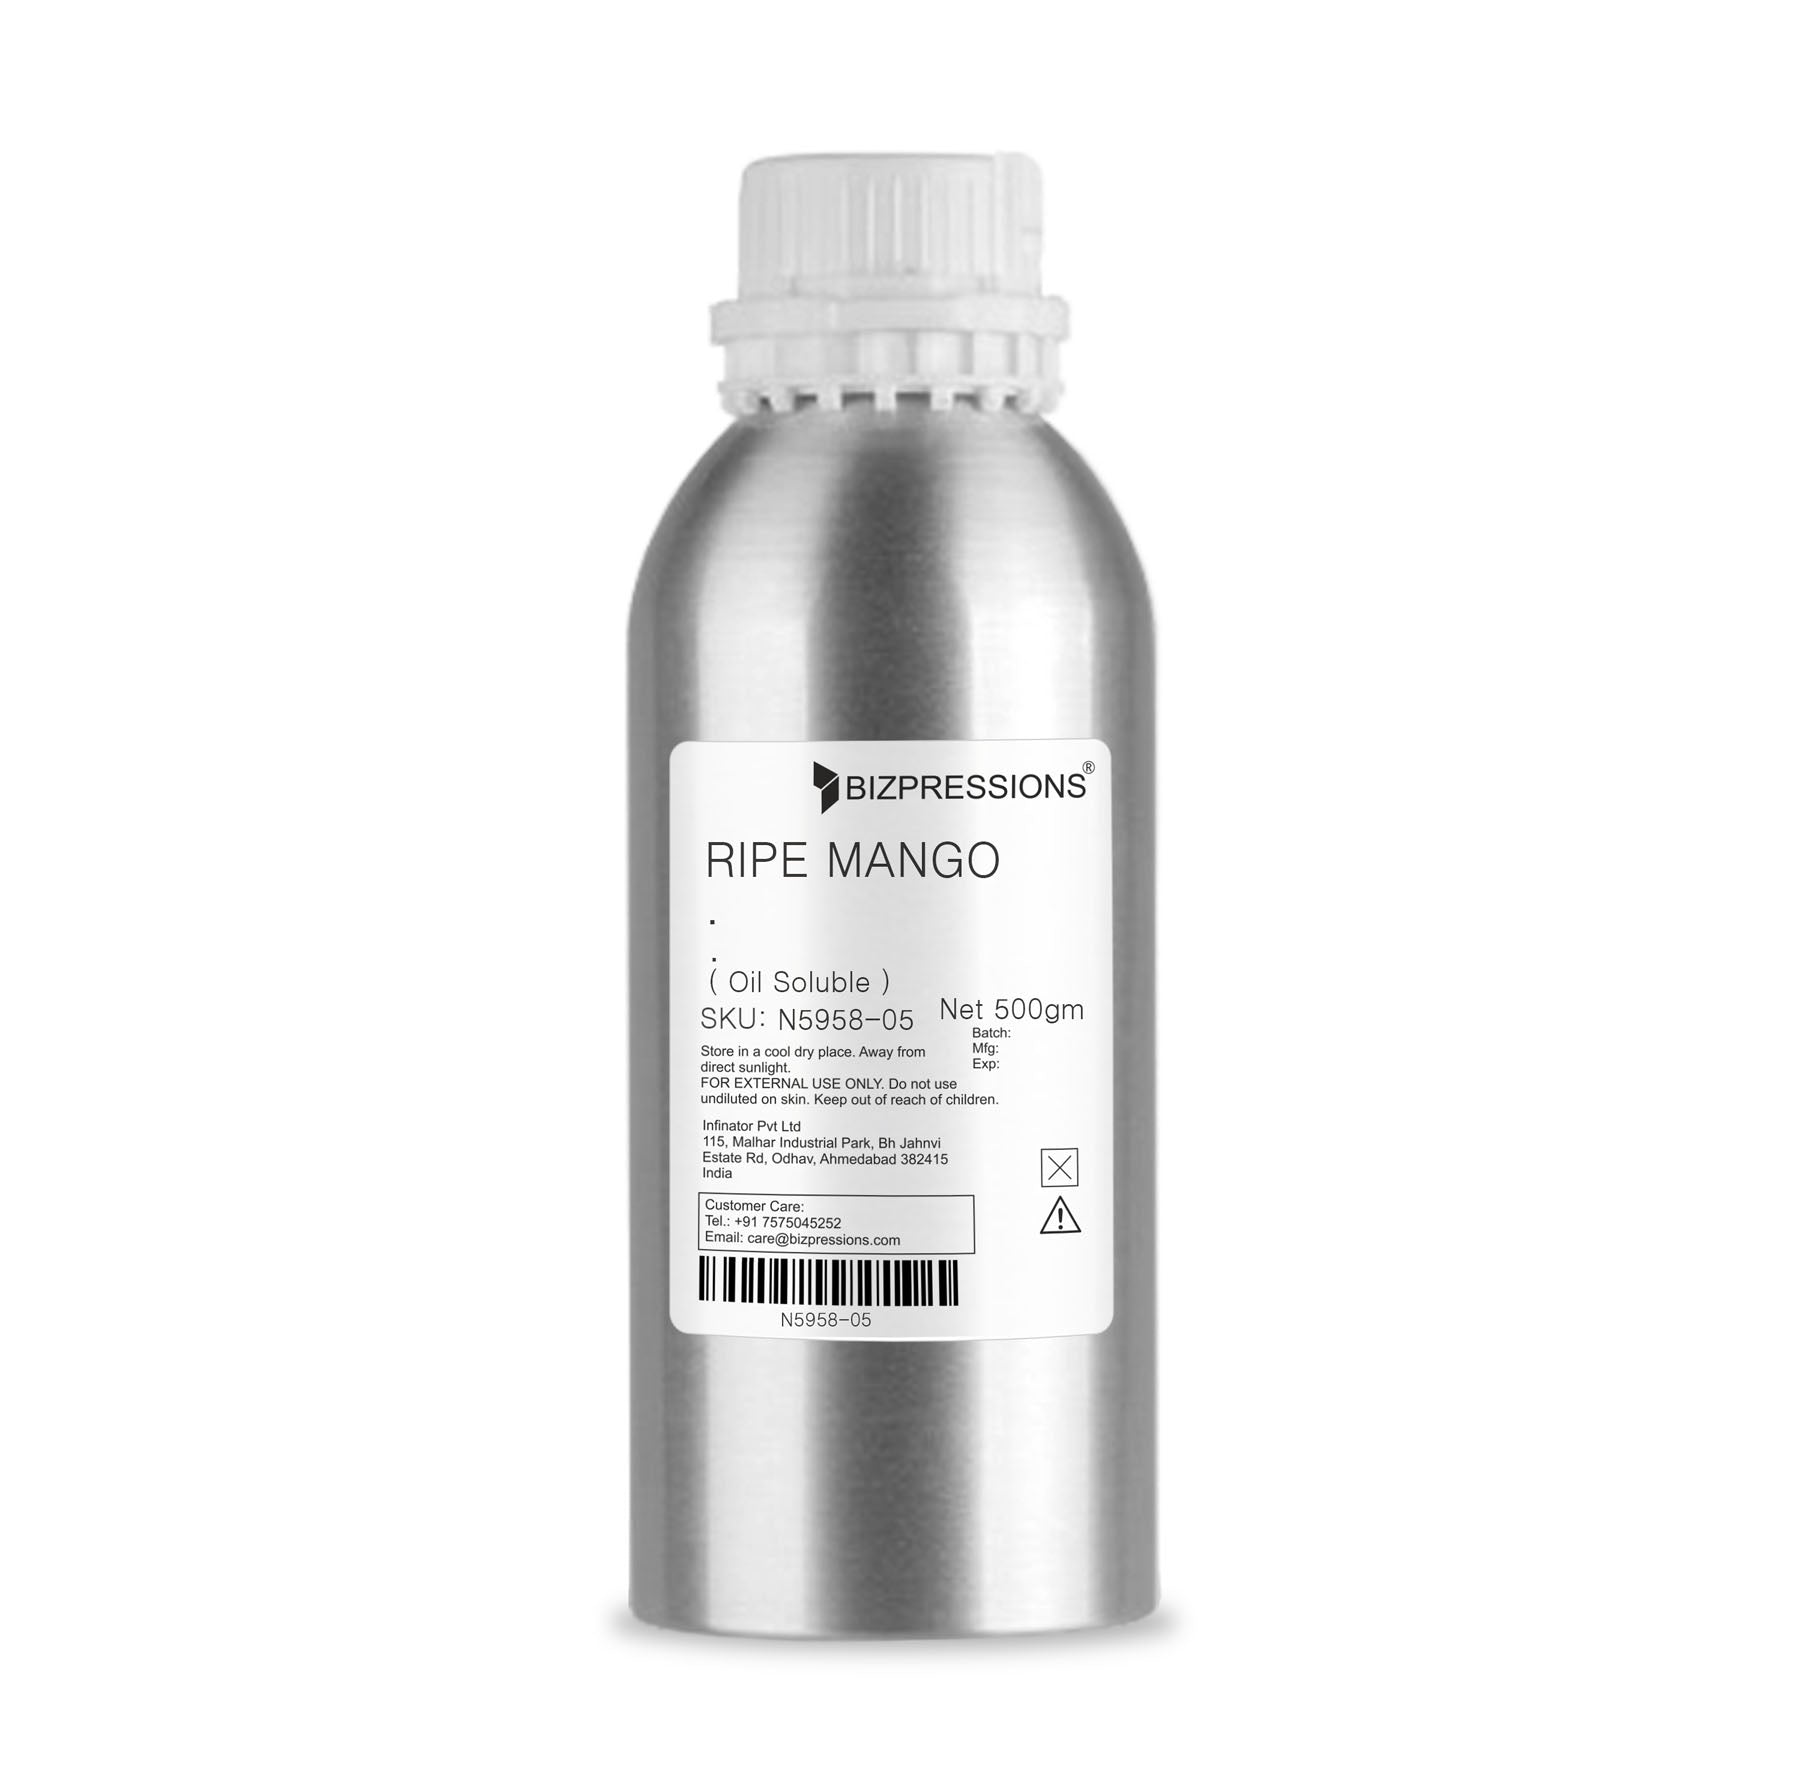 RIPE MANGO - Fragrance ( Oil Soluble ) - 500 gm